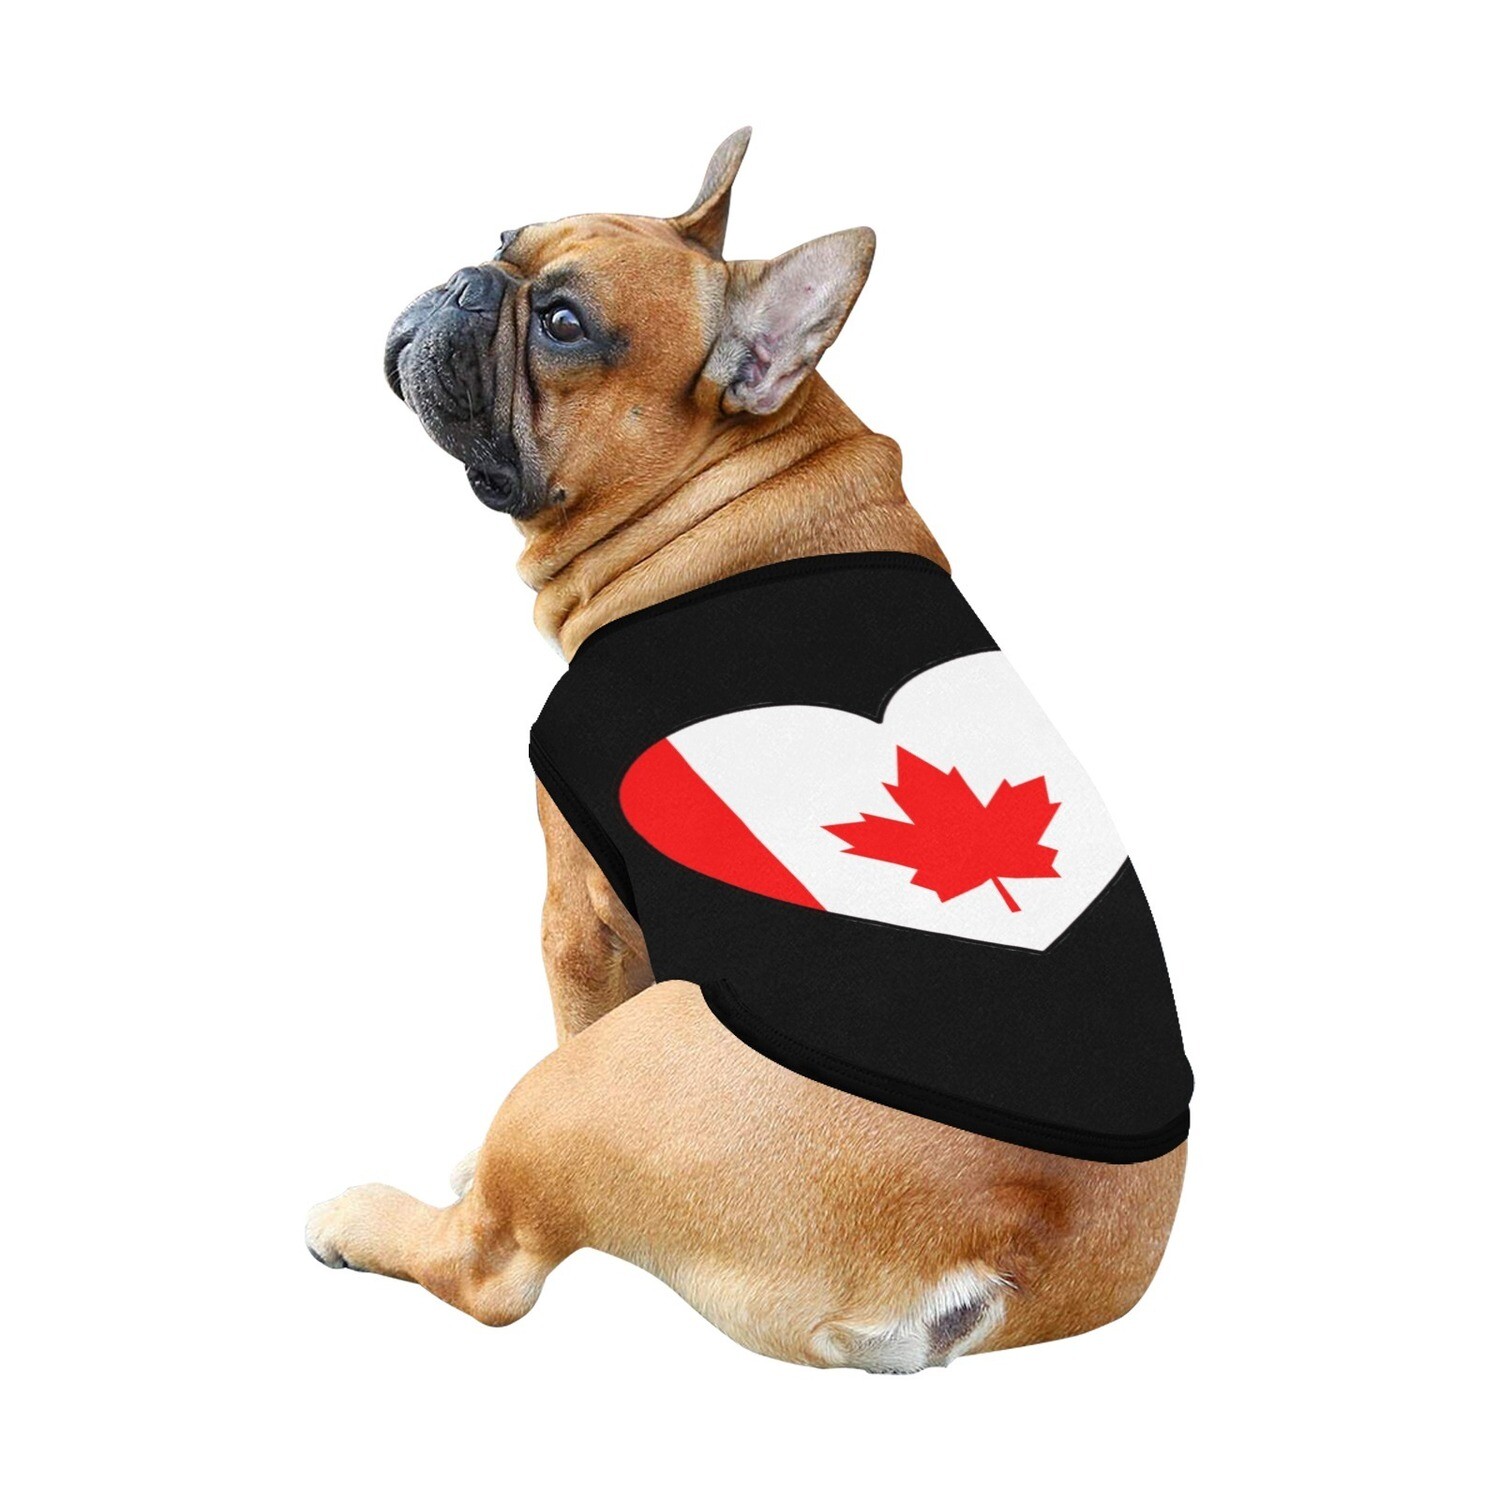 🐕 🇨🇦 I love Canada dog t-shirt, dog gift, dog tank top, dog shirt, dog clothes, gift, 7 sizes XS to 3XL, Canadian flag, Canadian, heart, black